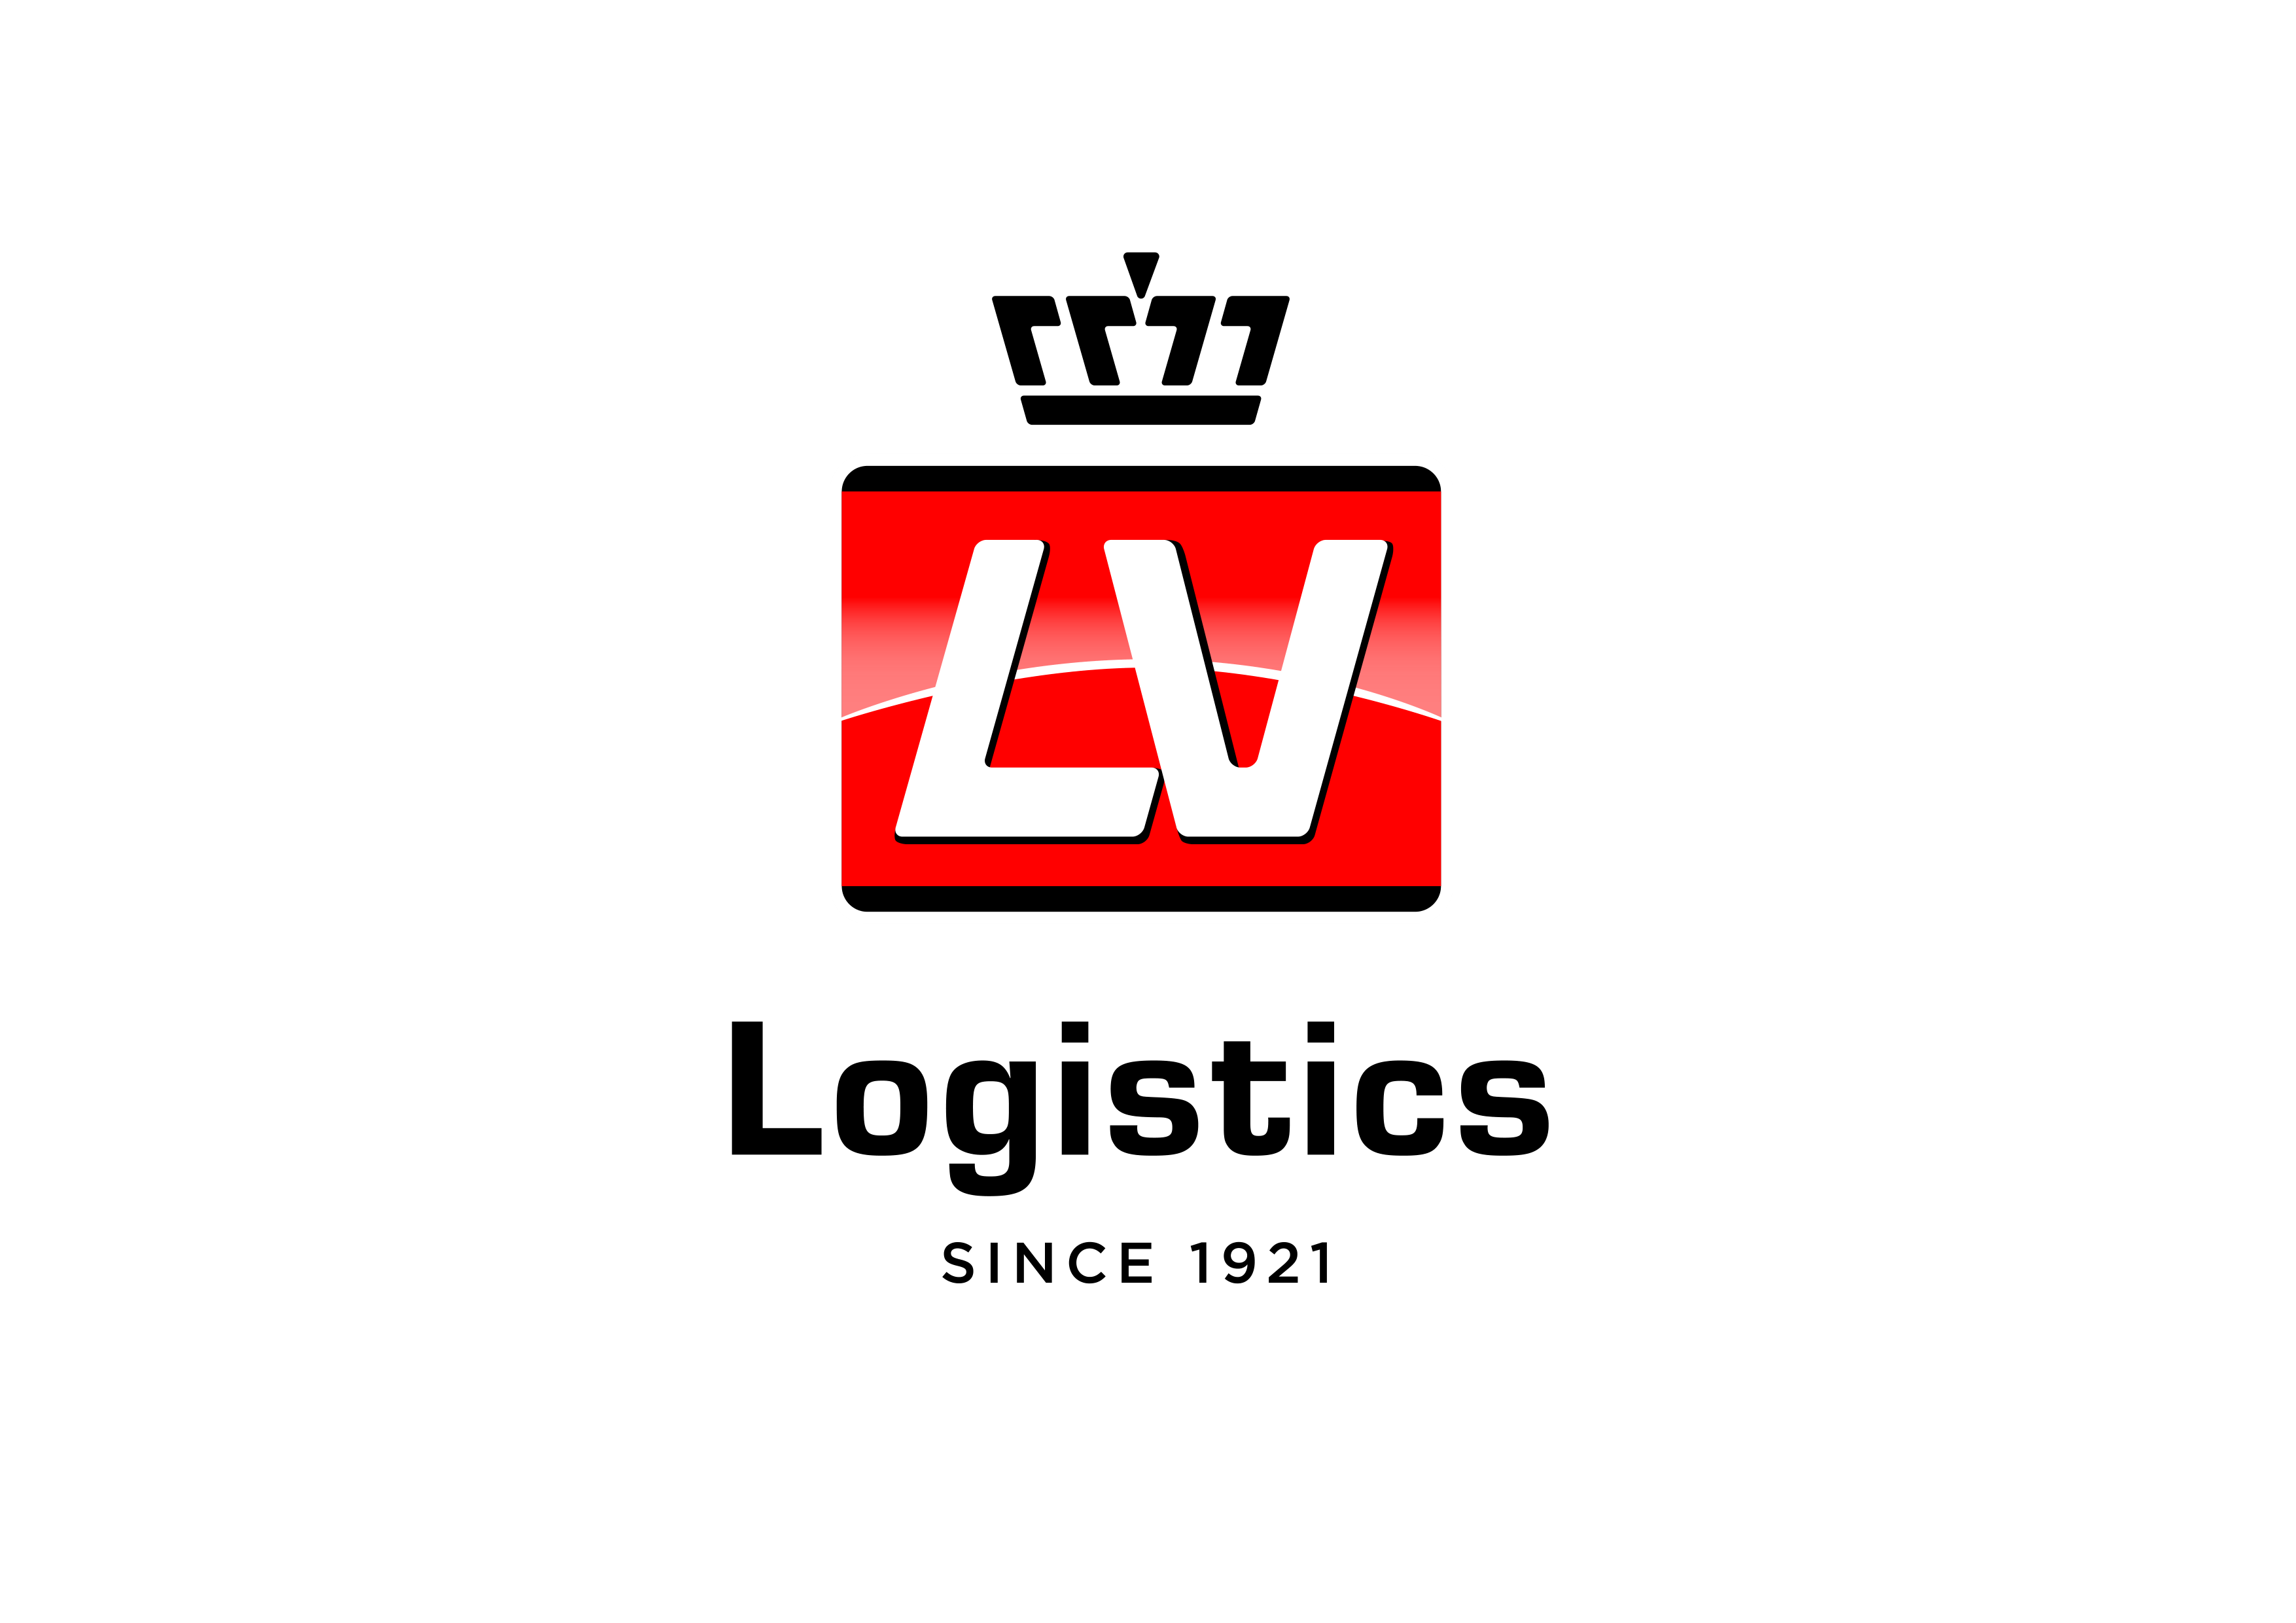 LV Logistics